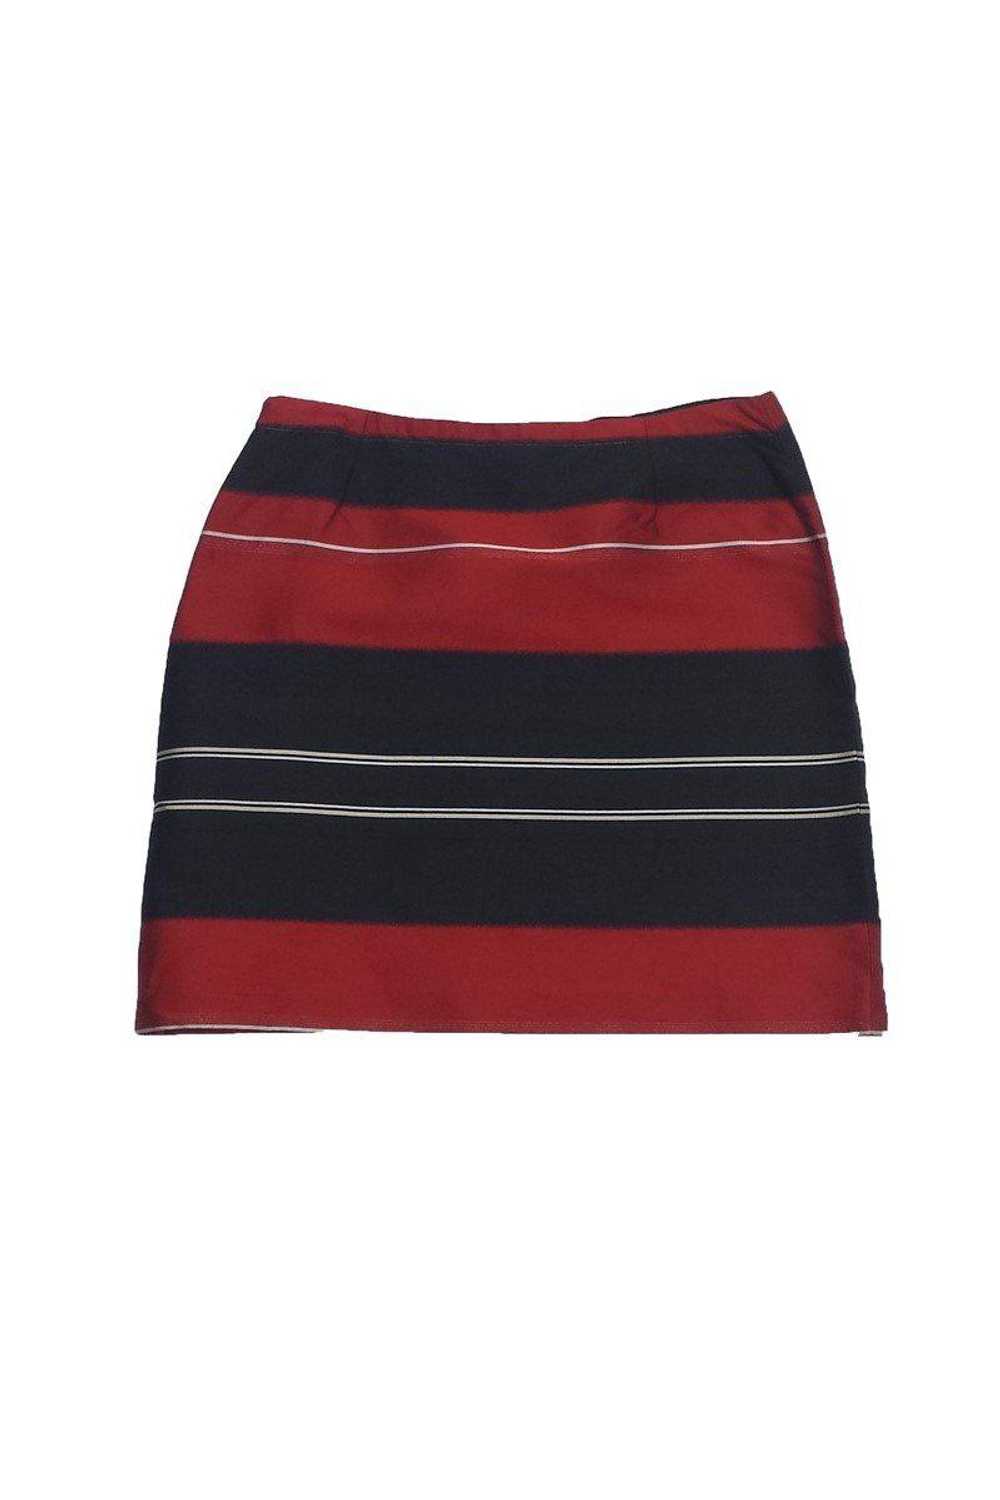 Michael Kors - Red & Black Striped Miniskirt Sz 10 - image 2